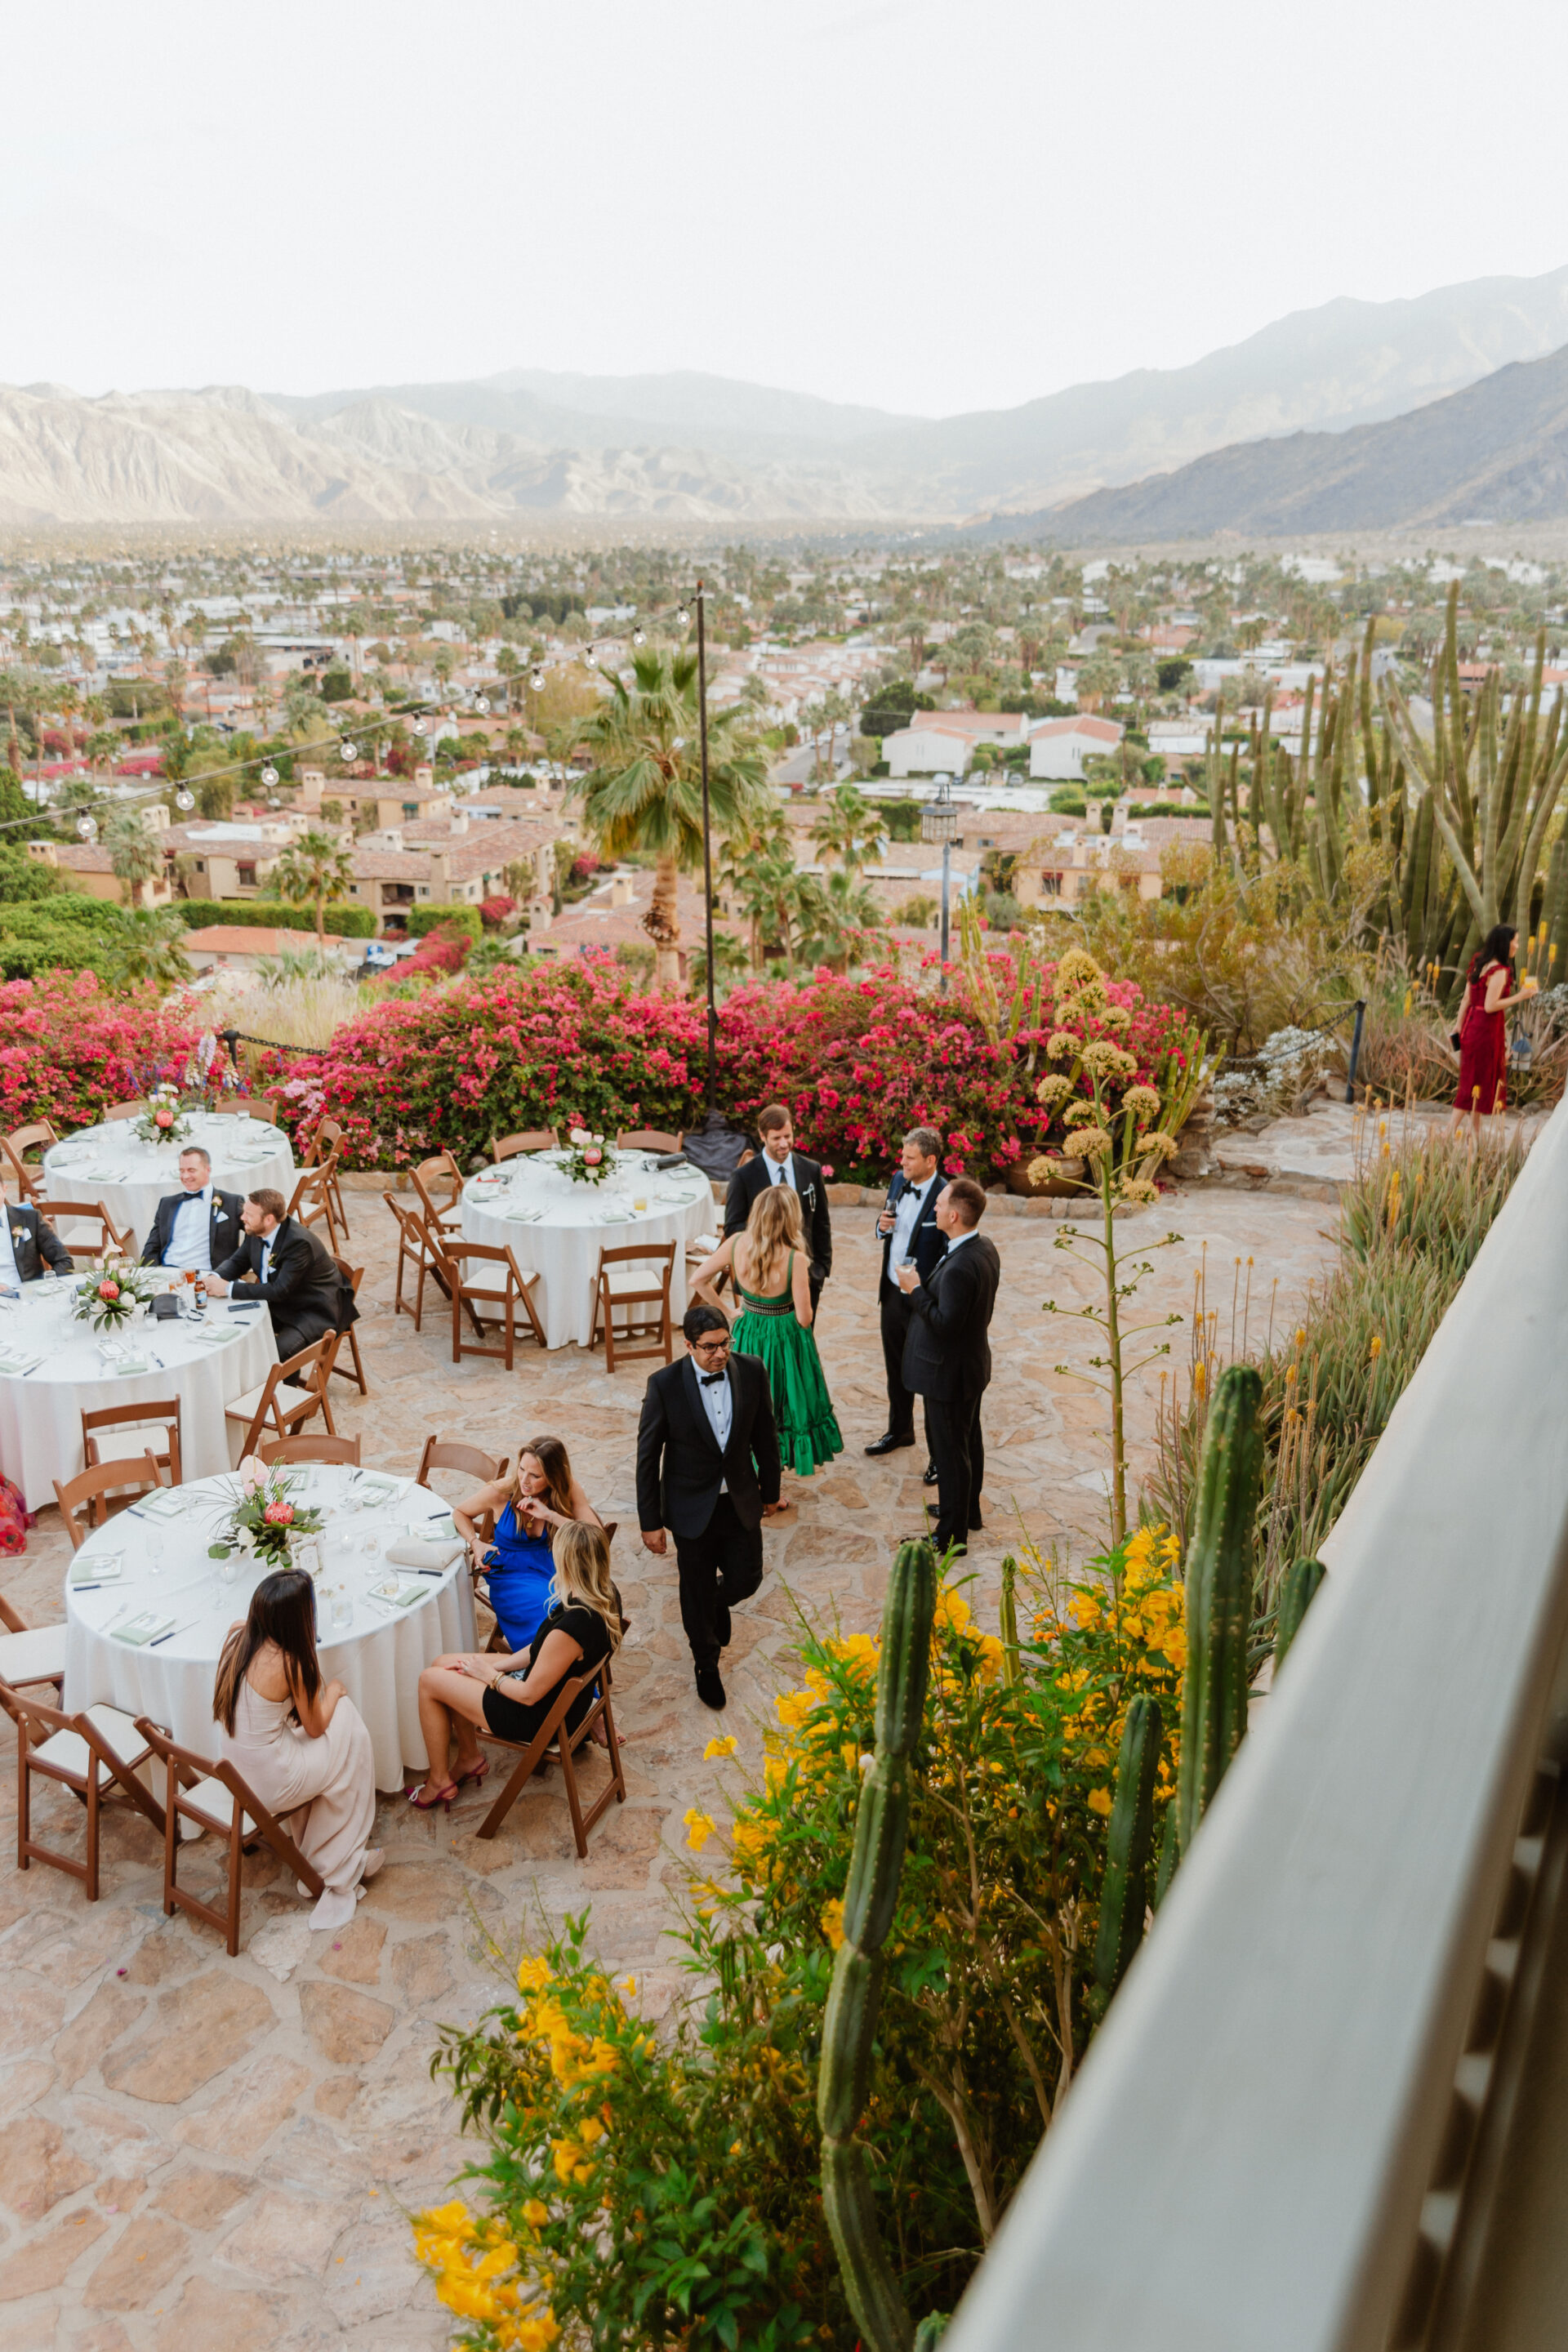 Parker Palm Springs, Southern California Wedding Venue,